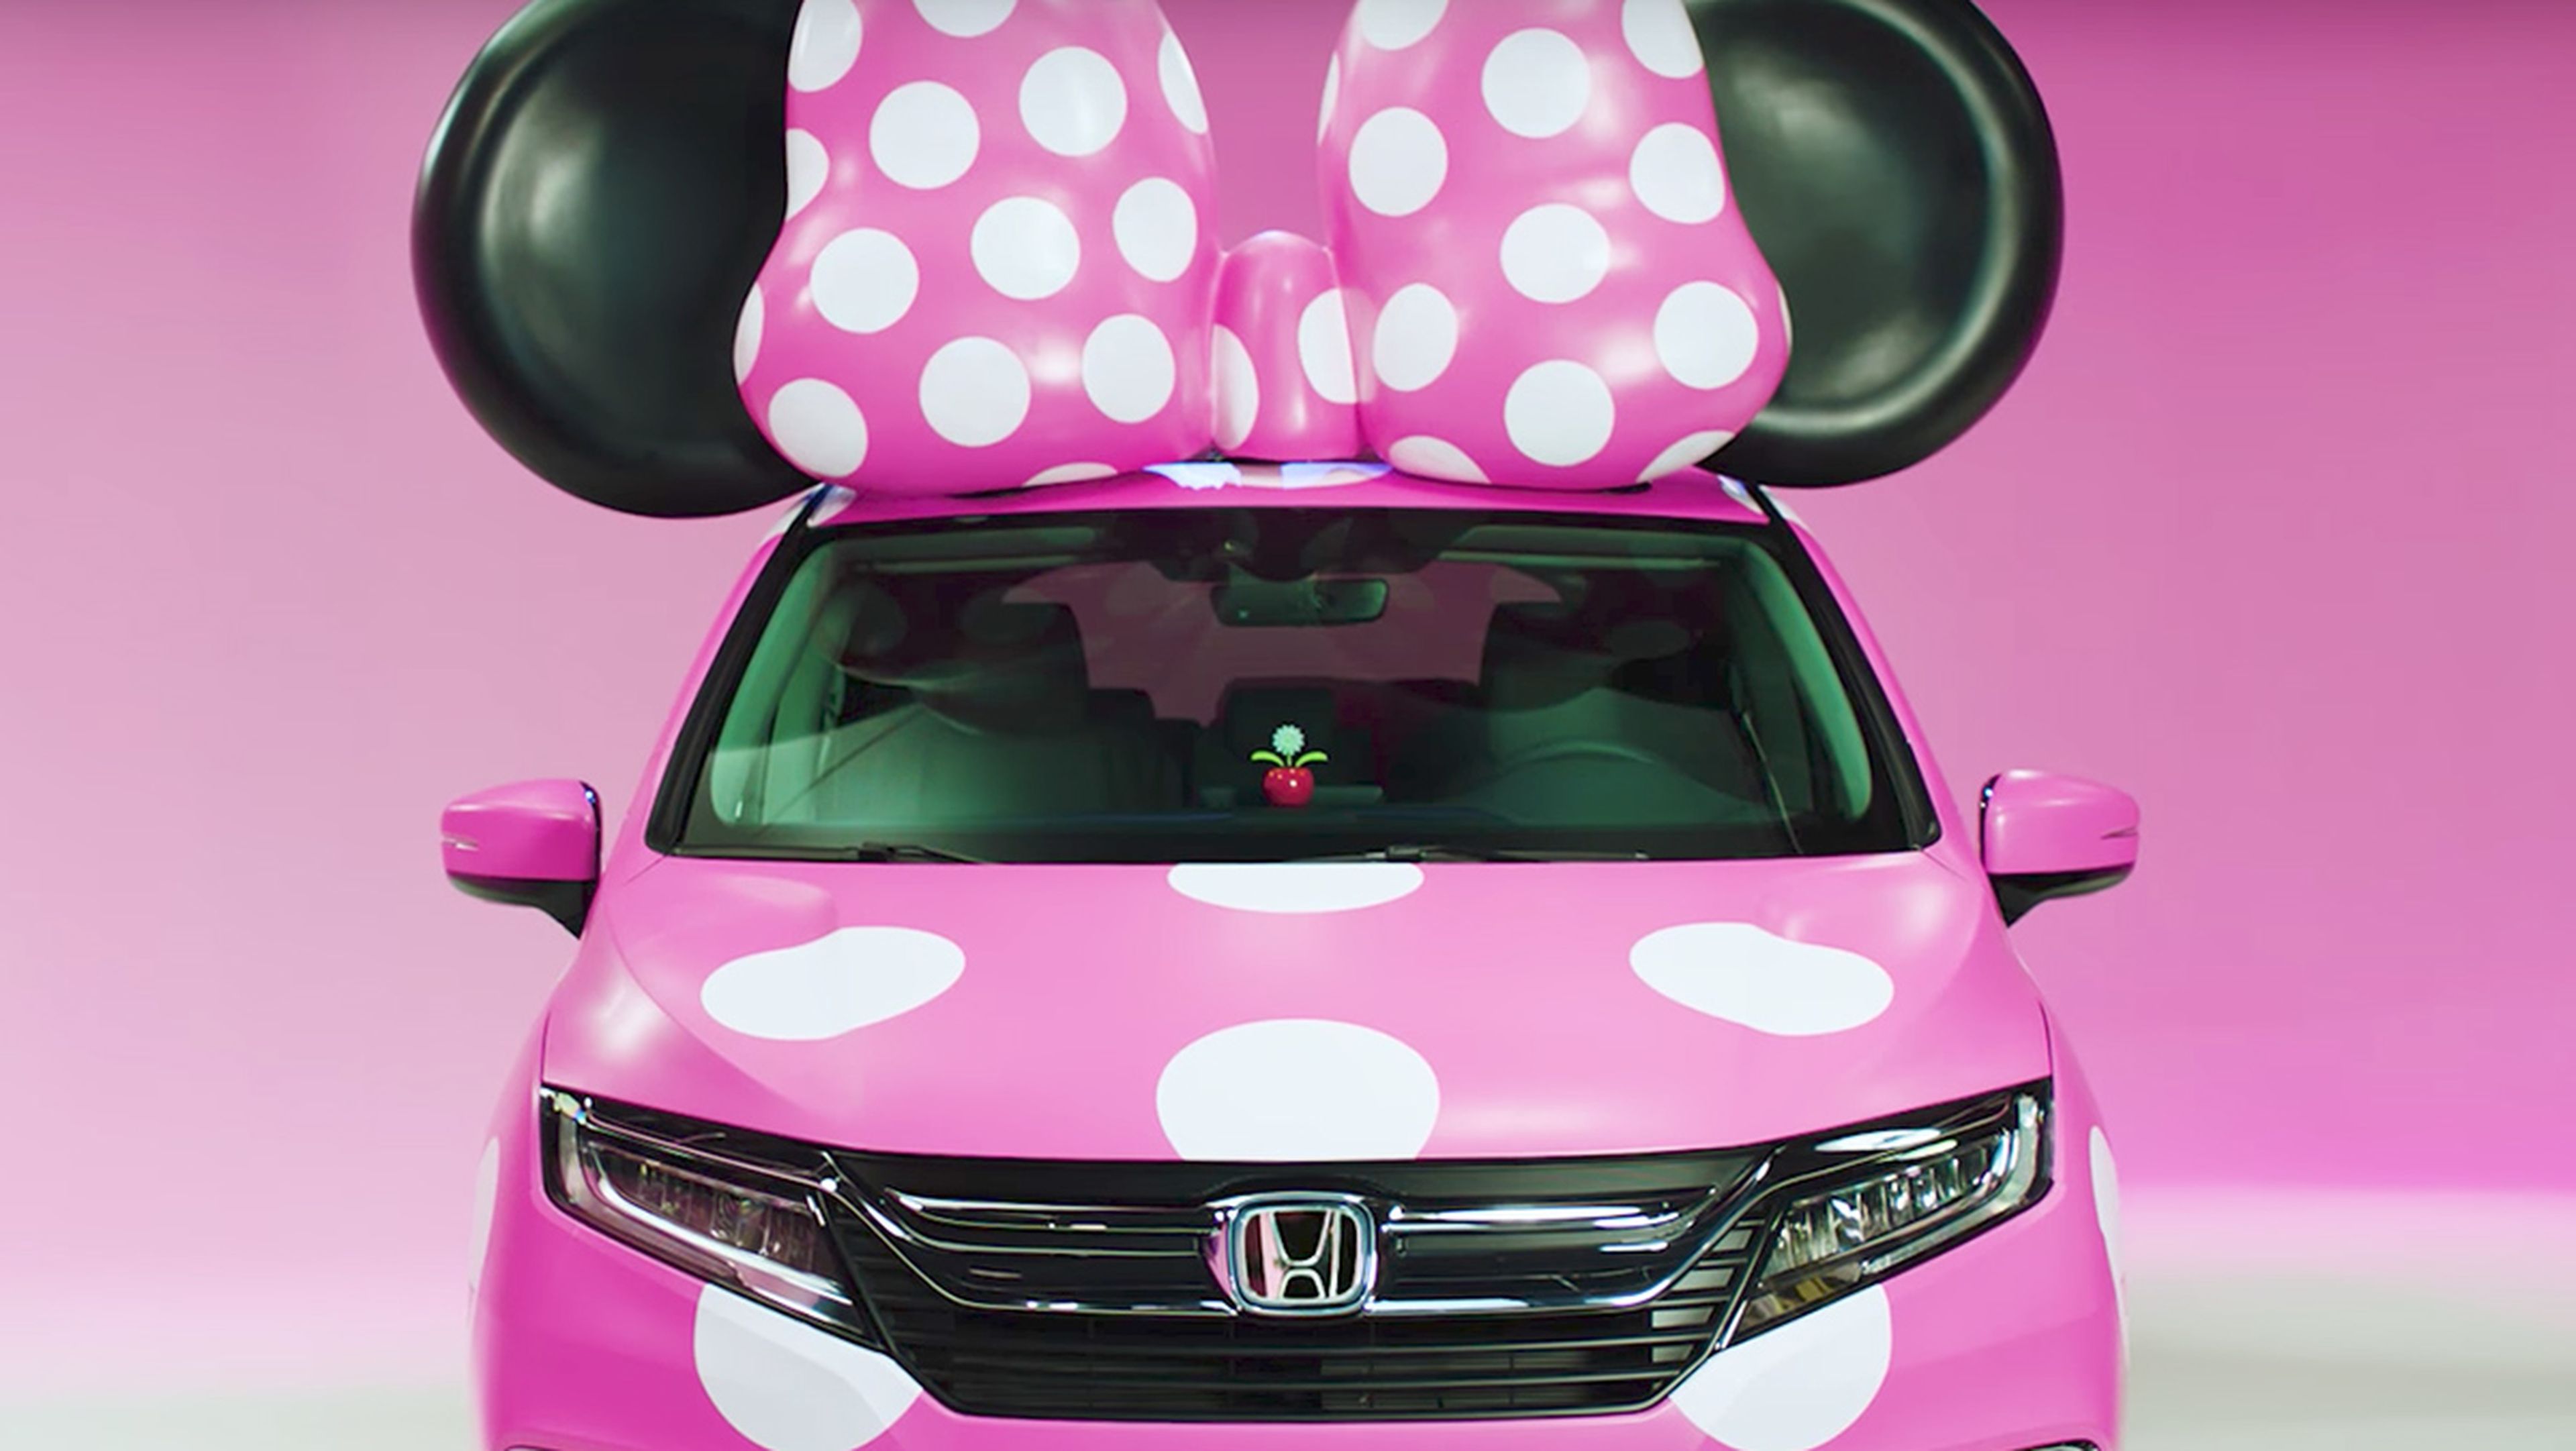 Honda ha creado un coche dedicado a Minnie Mouse